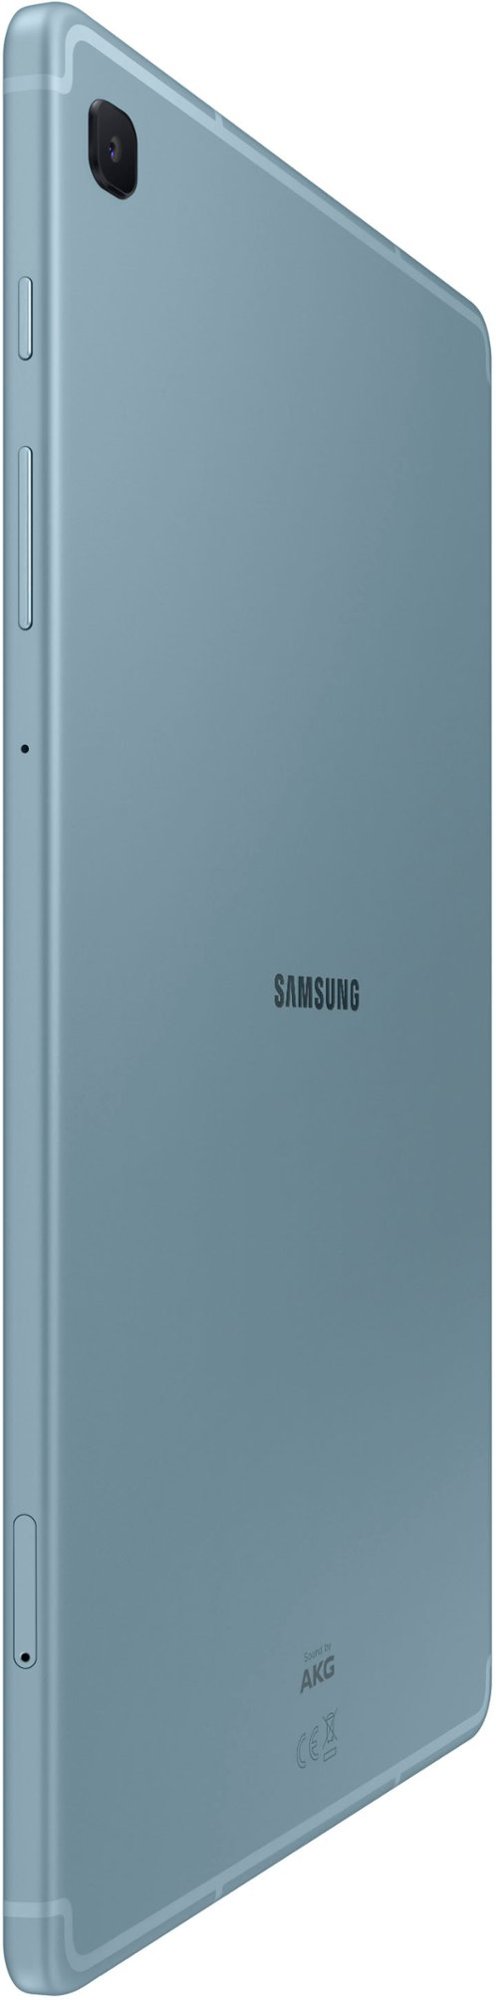 Samsung Galaxy Tab S6 10.4" Lite Tablet (Wi-Fi) - Angora Blue (64GB)